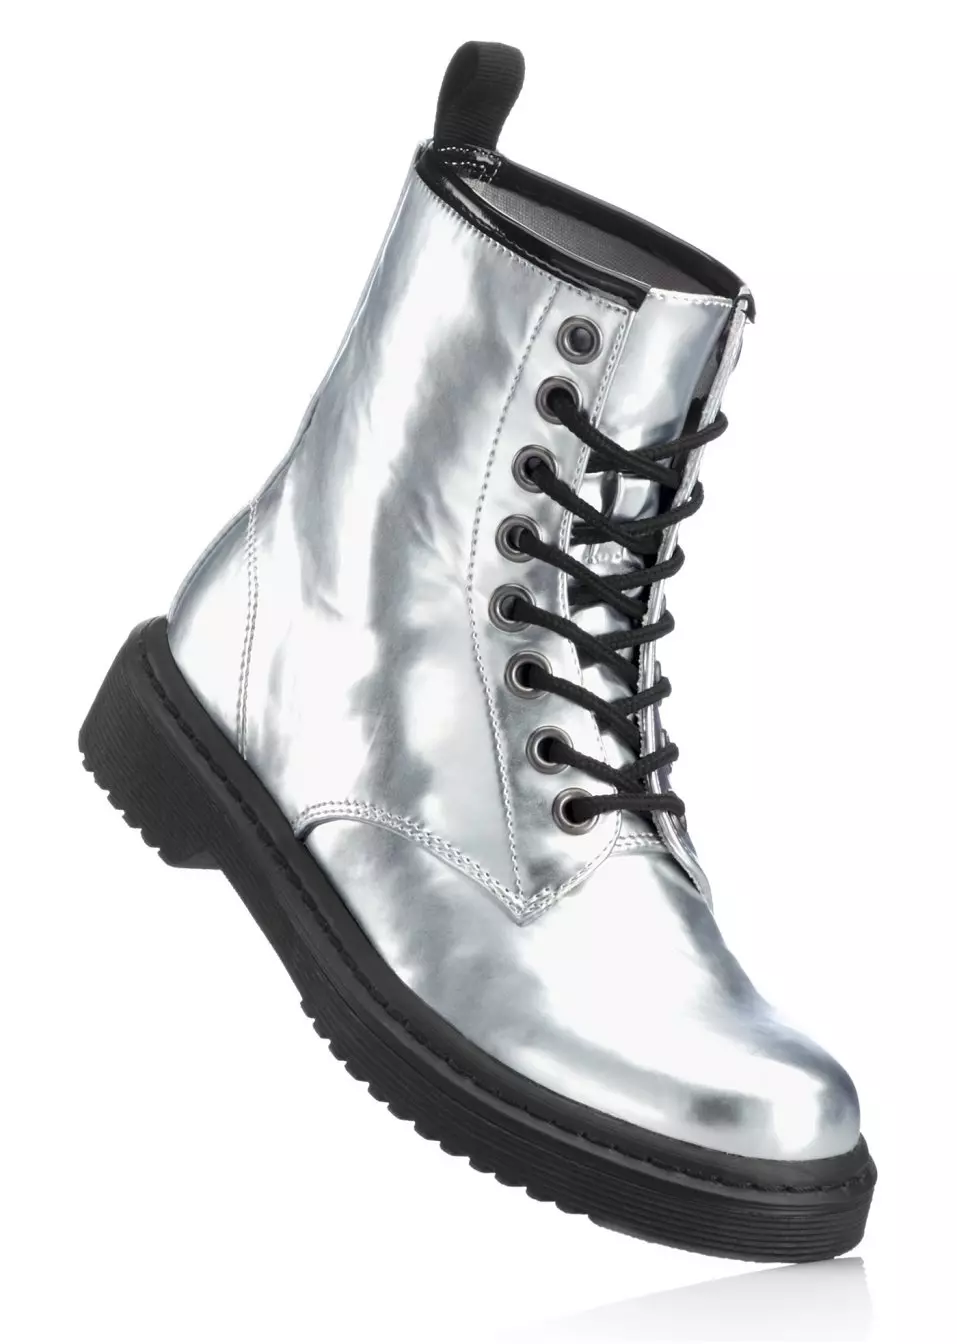 Boots (135 wêne): Trendên Fashion 2021, ji Rock Rock, Eva, Camel, Grinders, How to Wear Derby With Jeans, Mîlîtar & Burgundy Style 1842_51